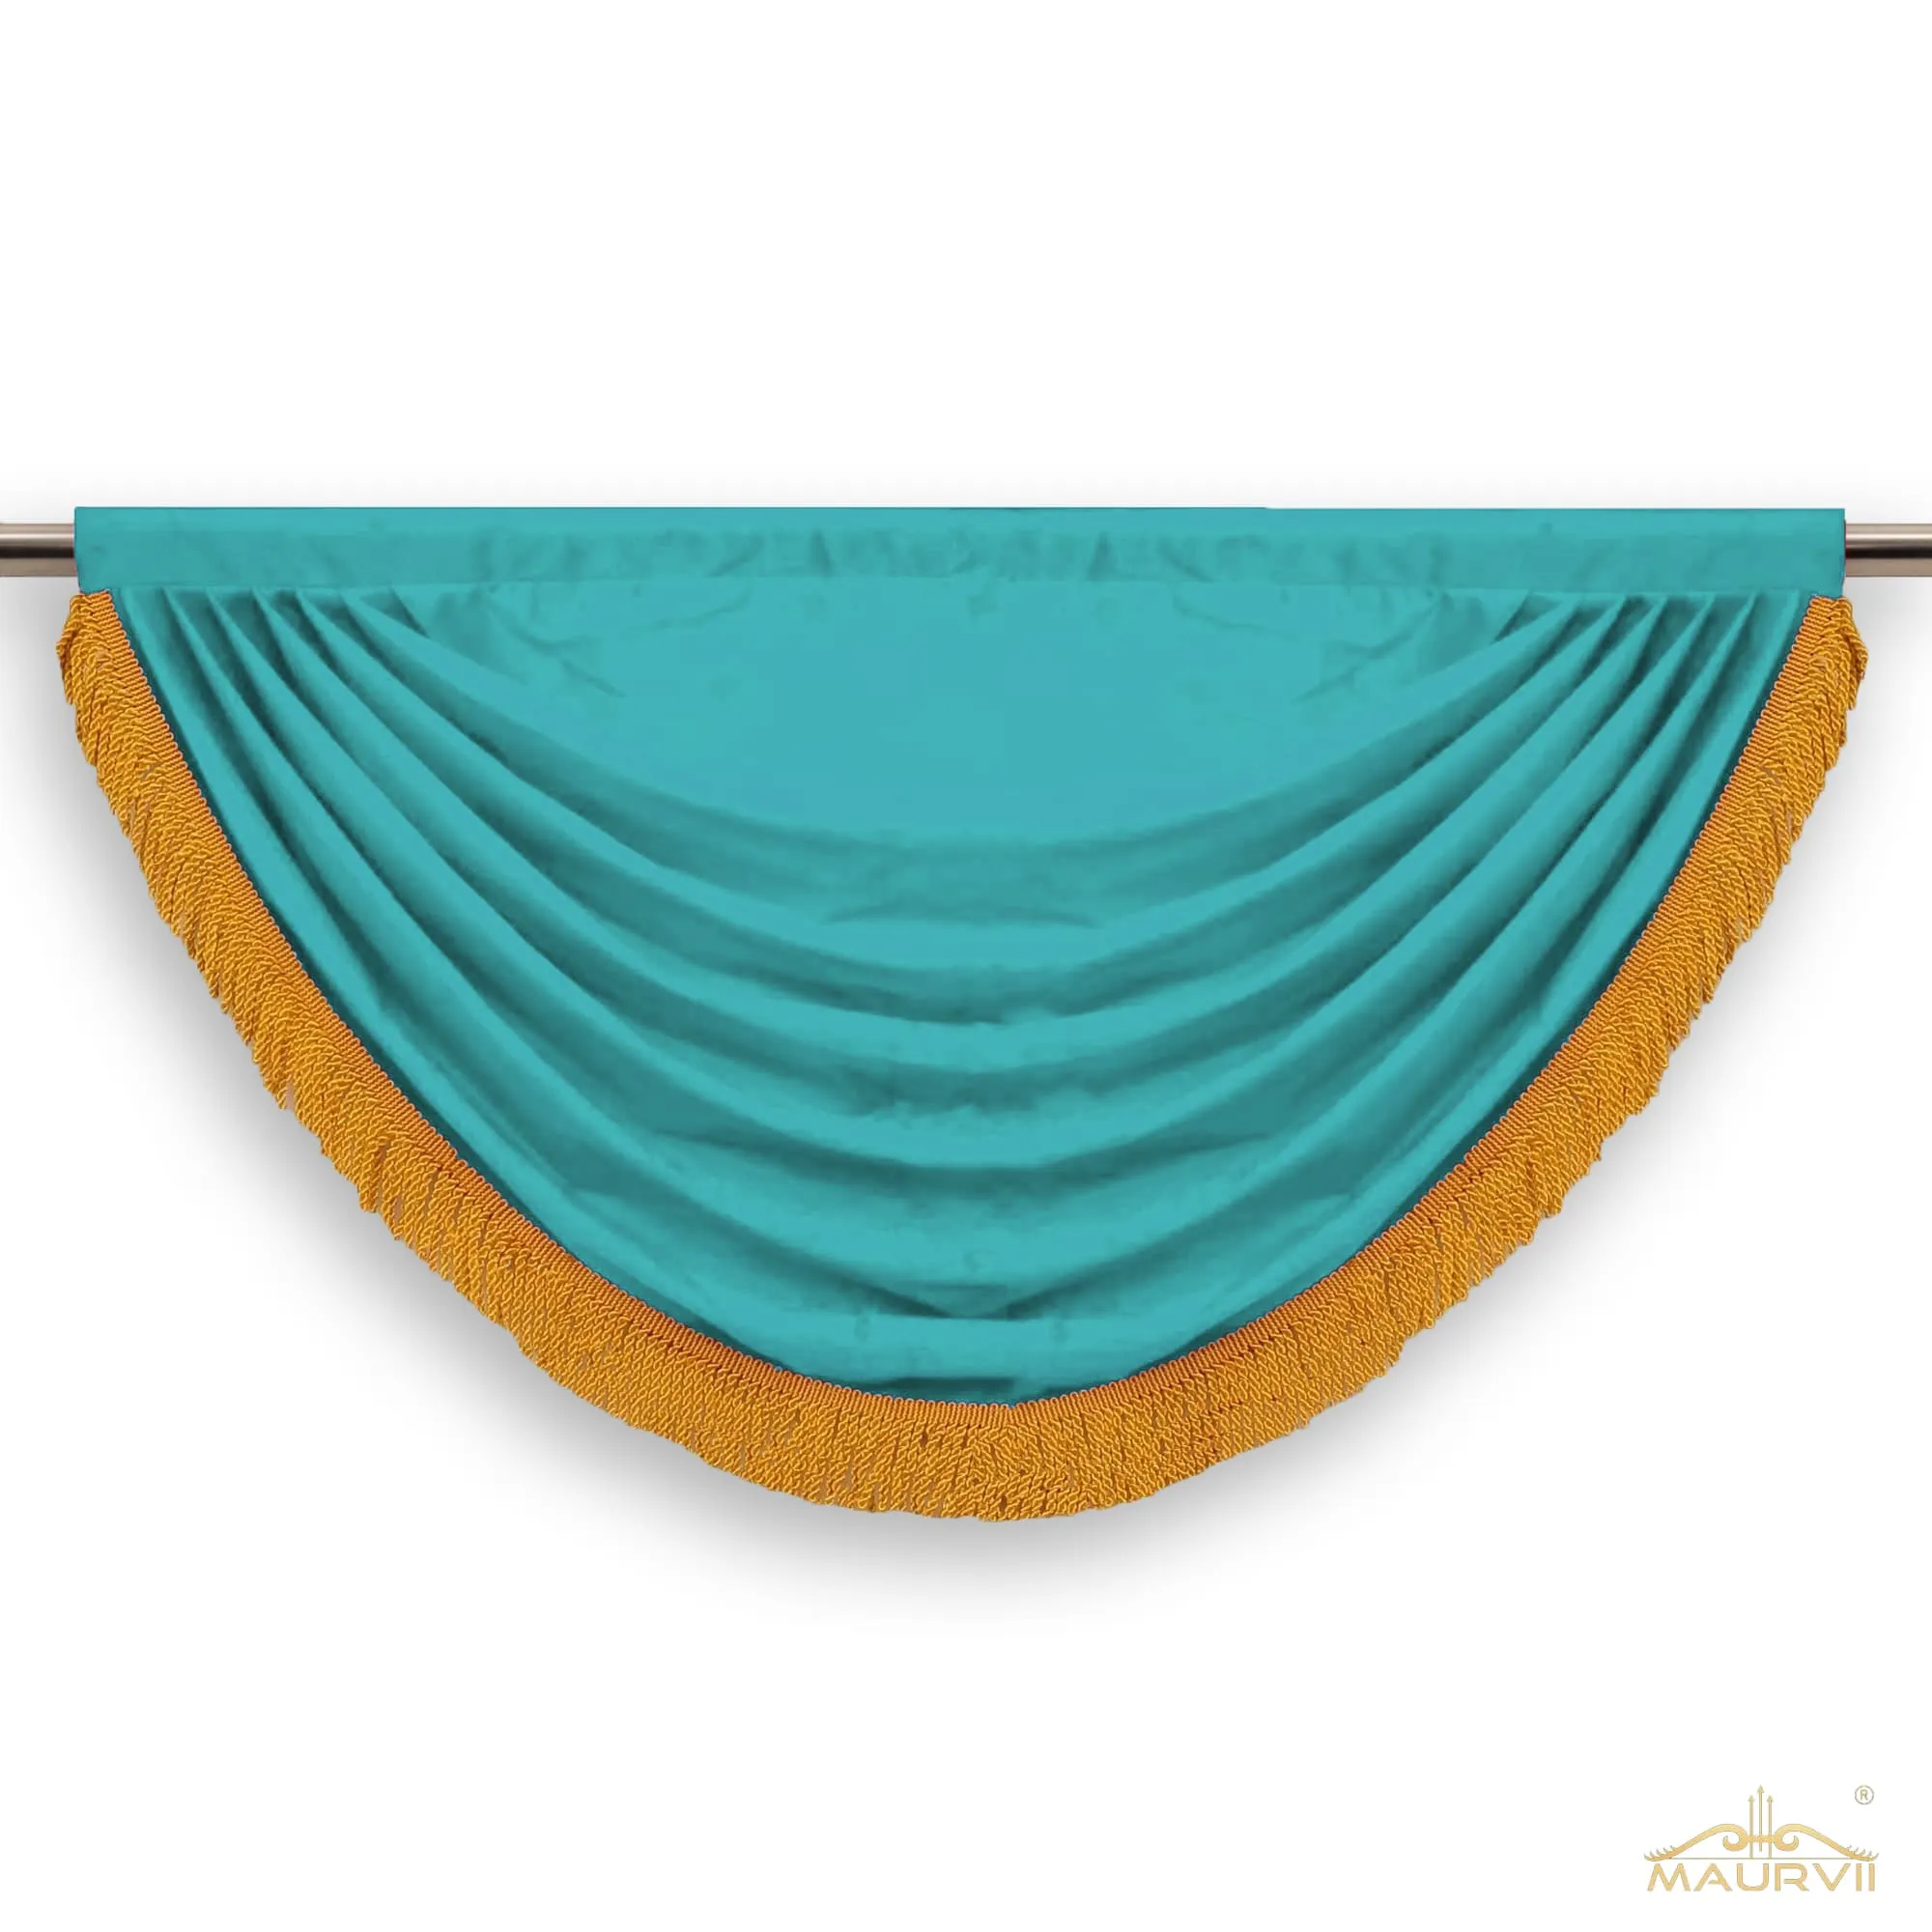 Aqua color valance curtains